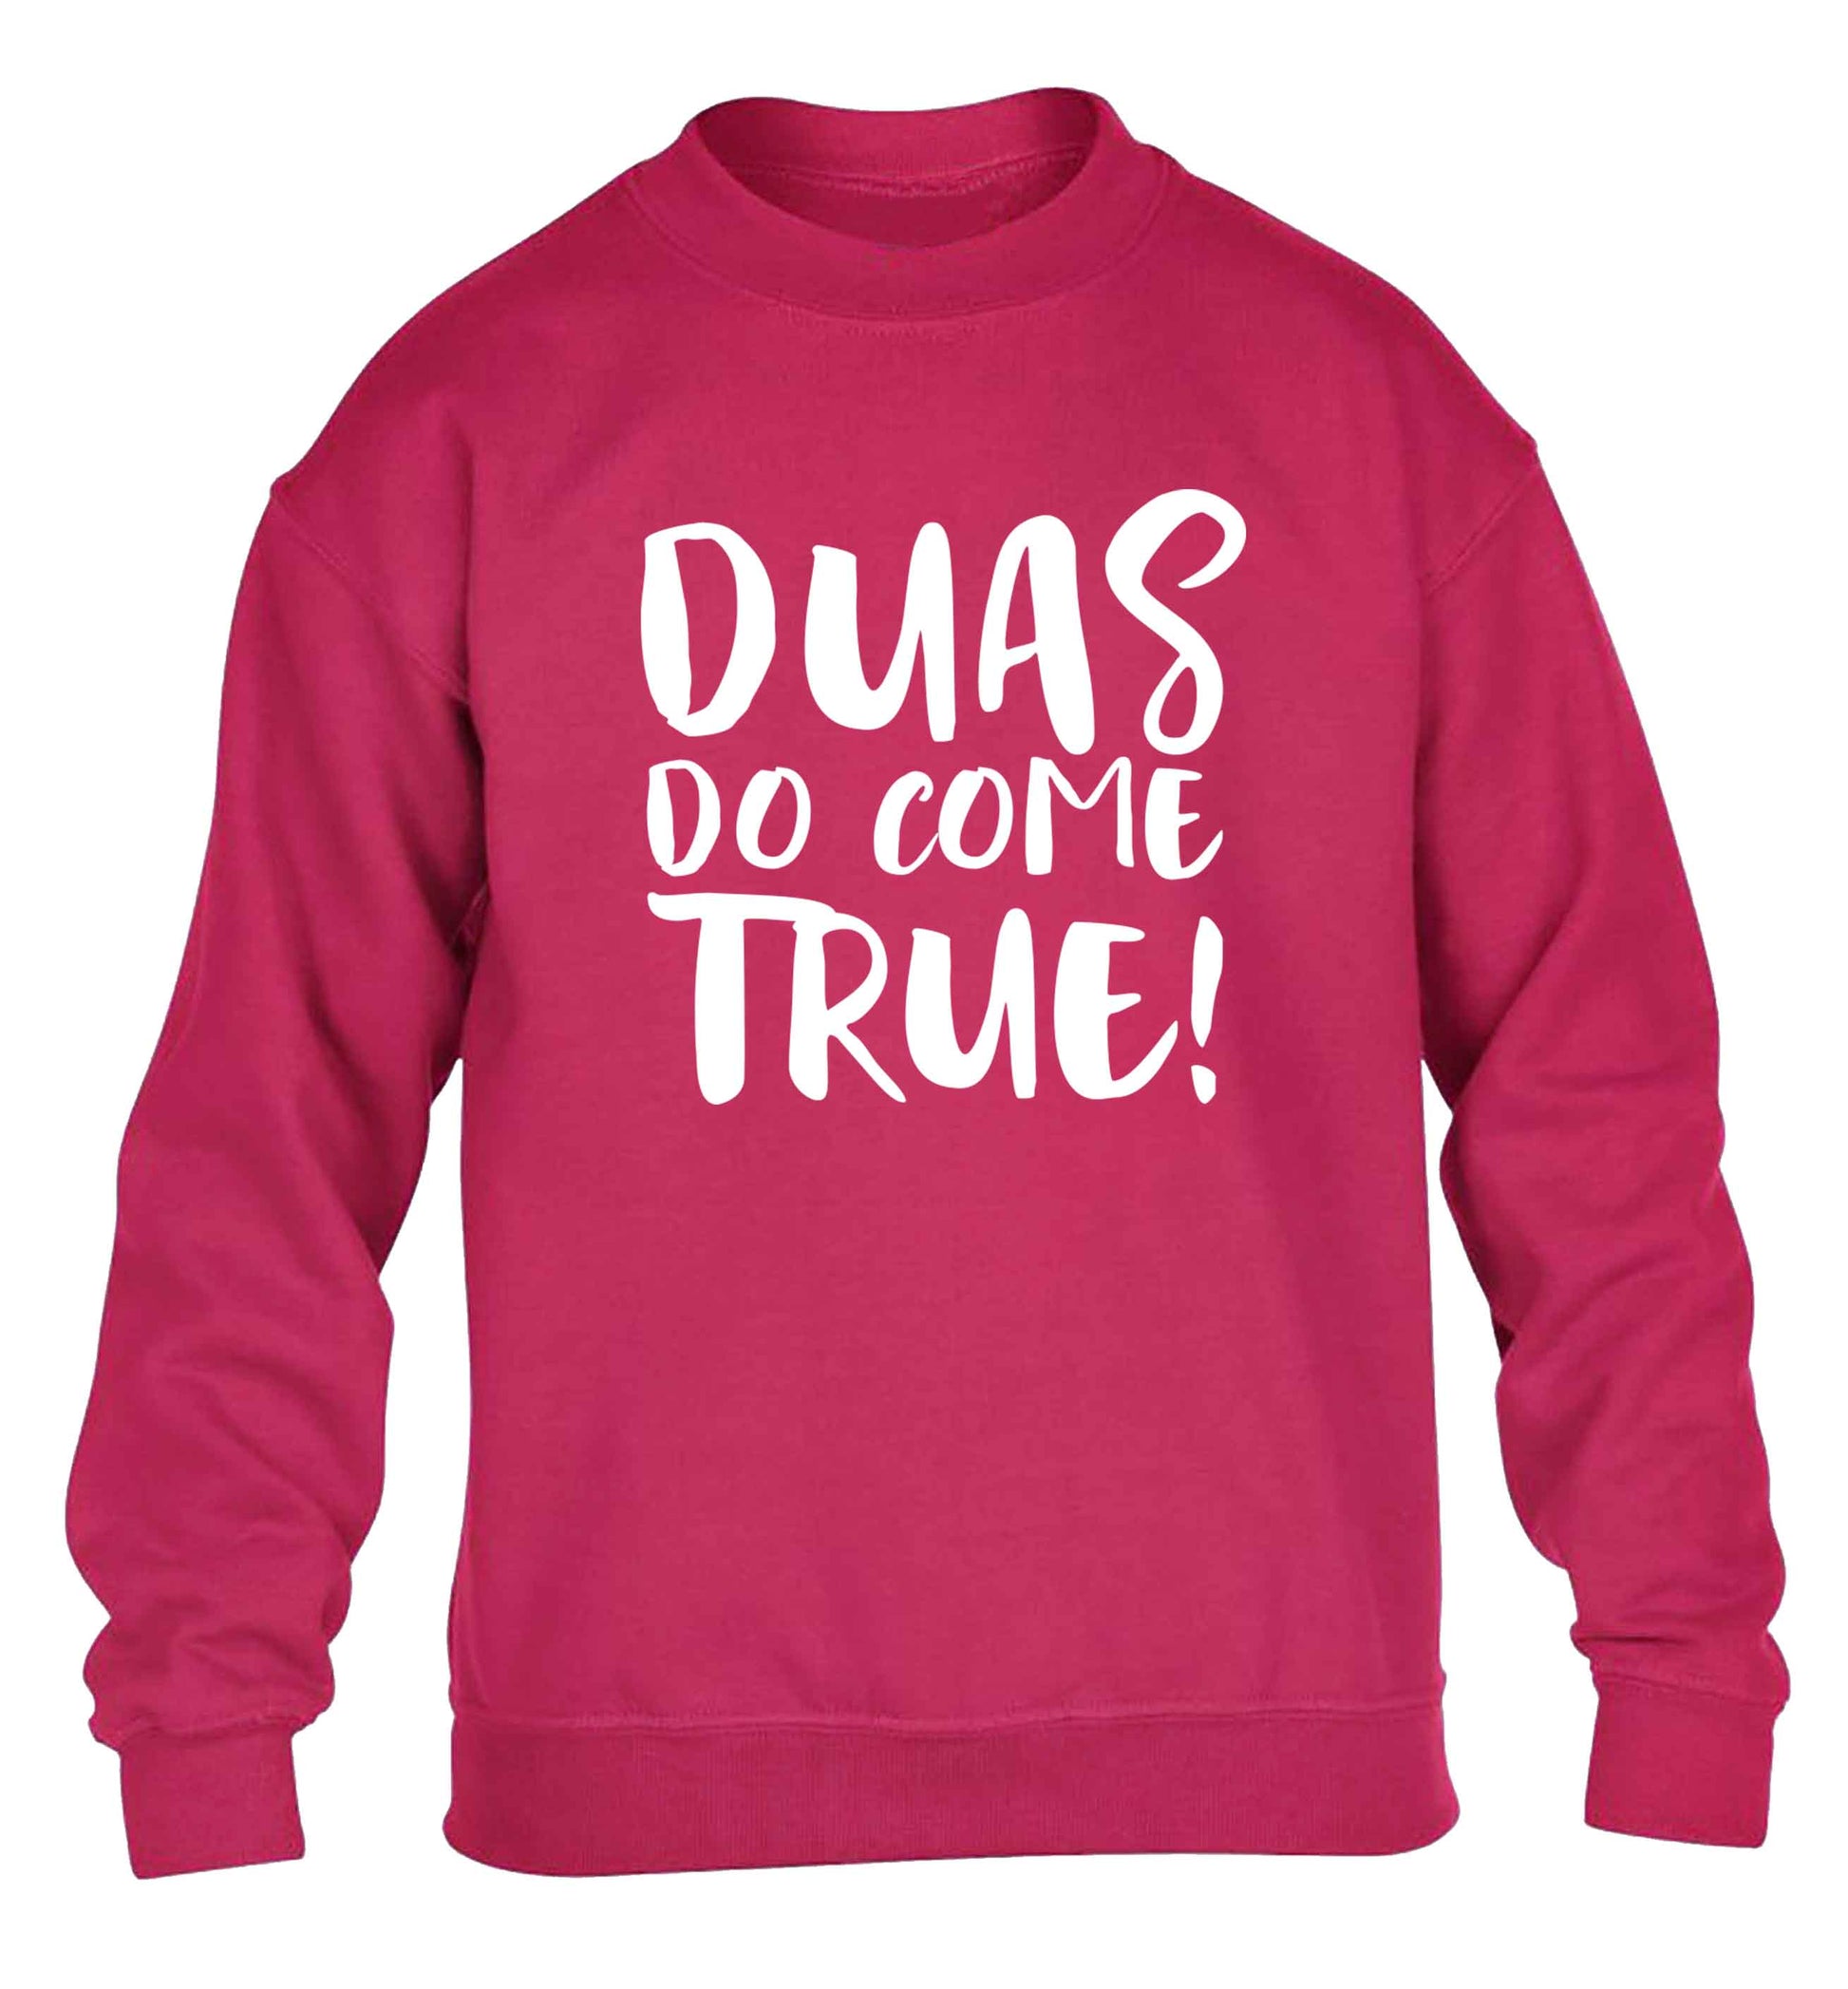 Duas do come true children's pink sweater 12-13 Years